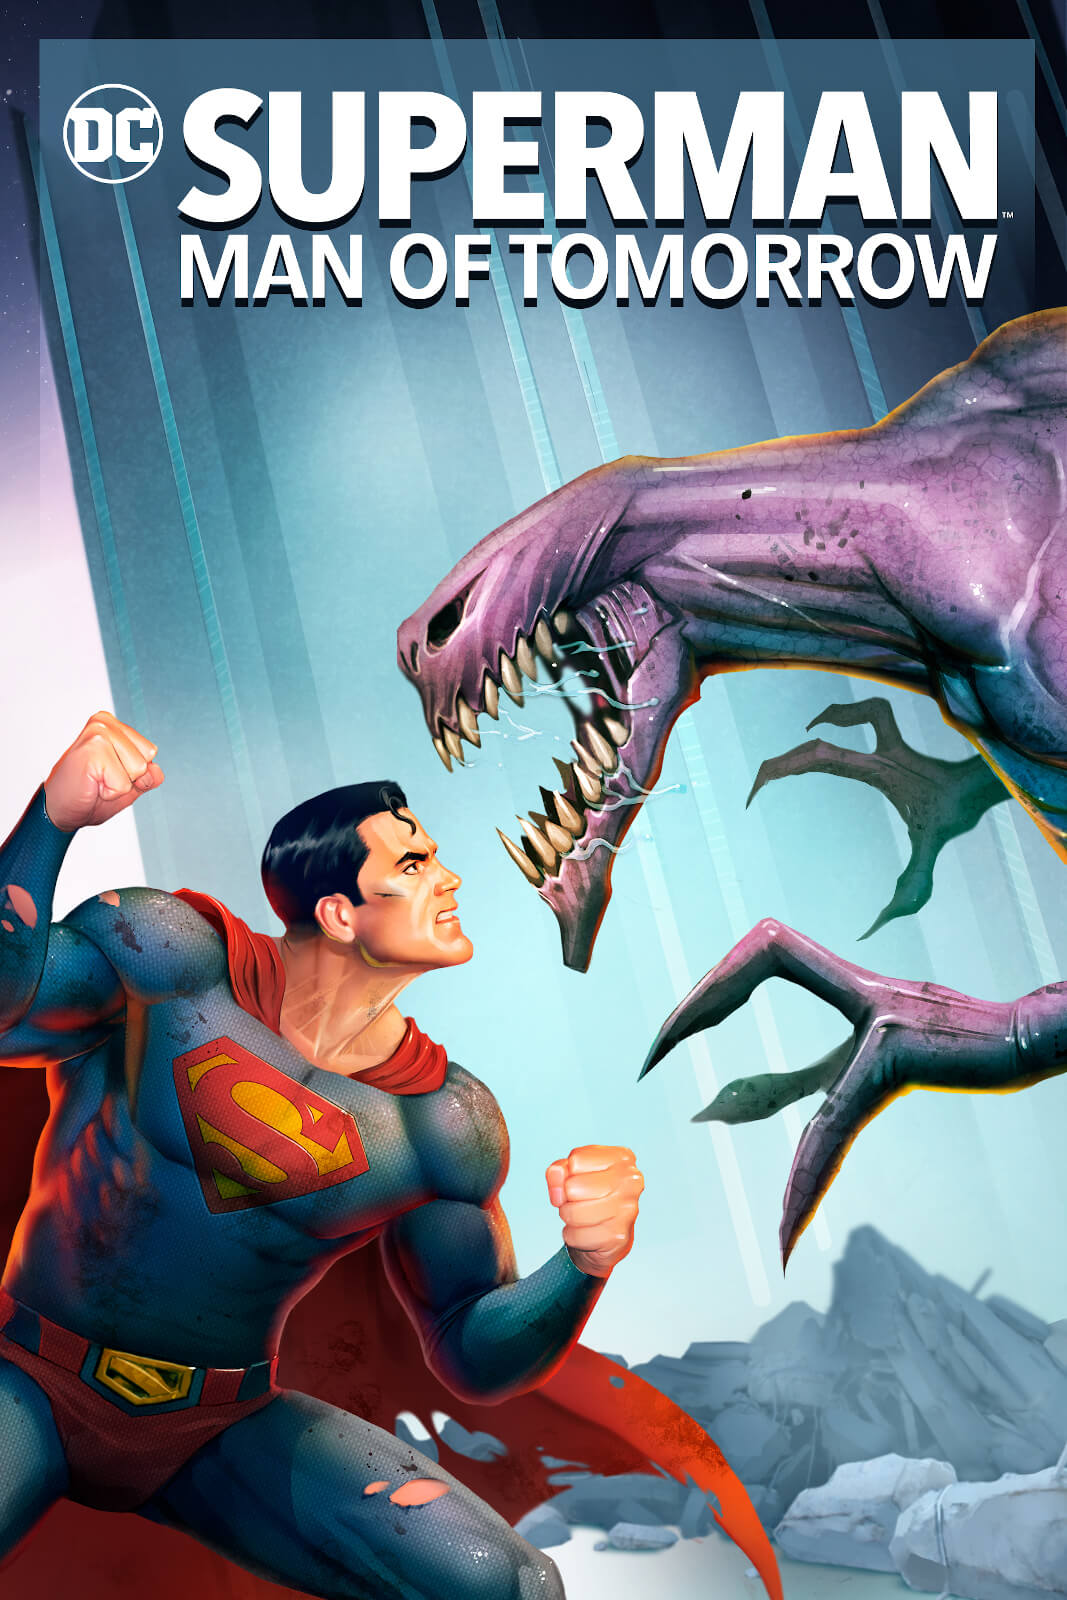 Superman Man of Tomorrow (2020) ซูเปอร์แมน บุรุษเหล็กแห่งอนาคต Darren Criss